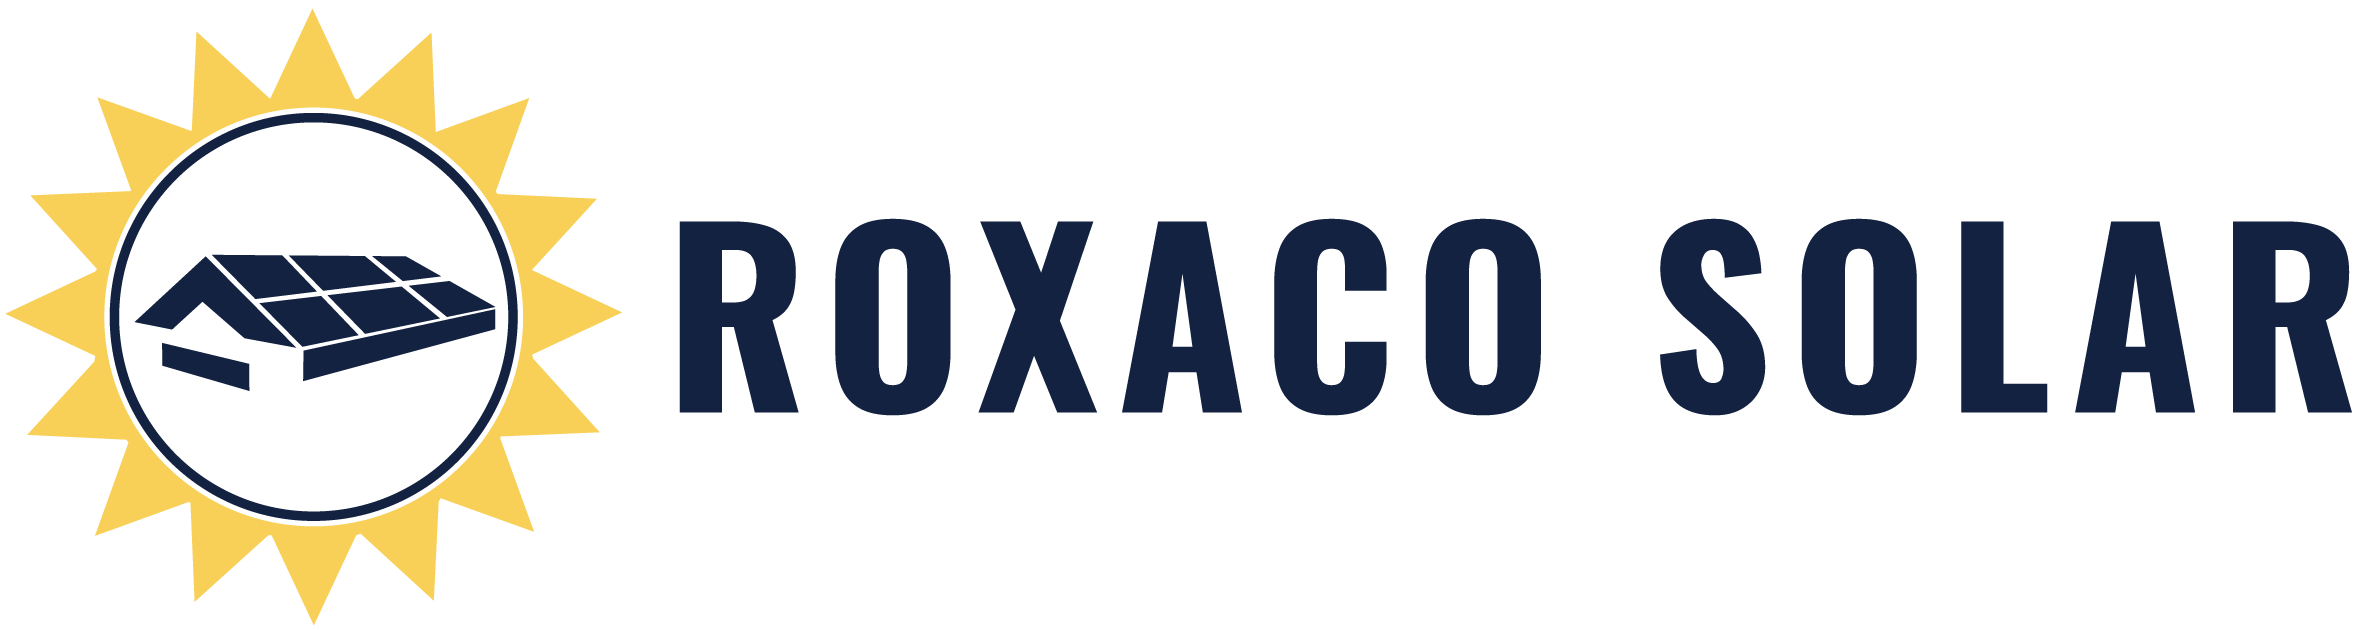 Roxaco LLC logo